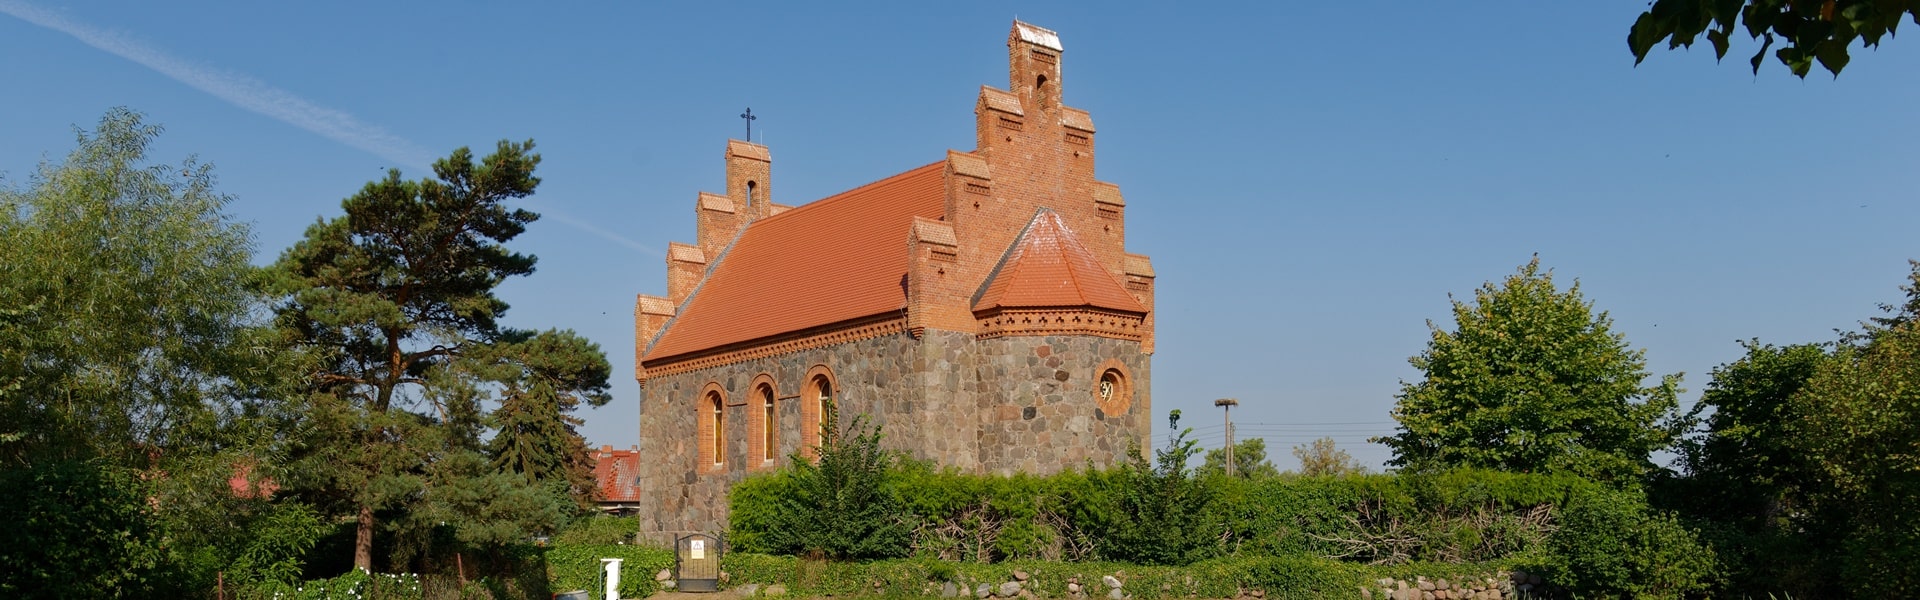 Kirche in Wegezin am 16. August 2020